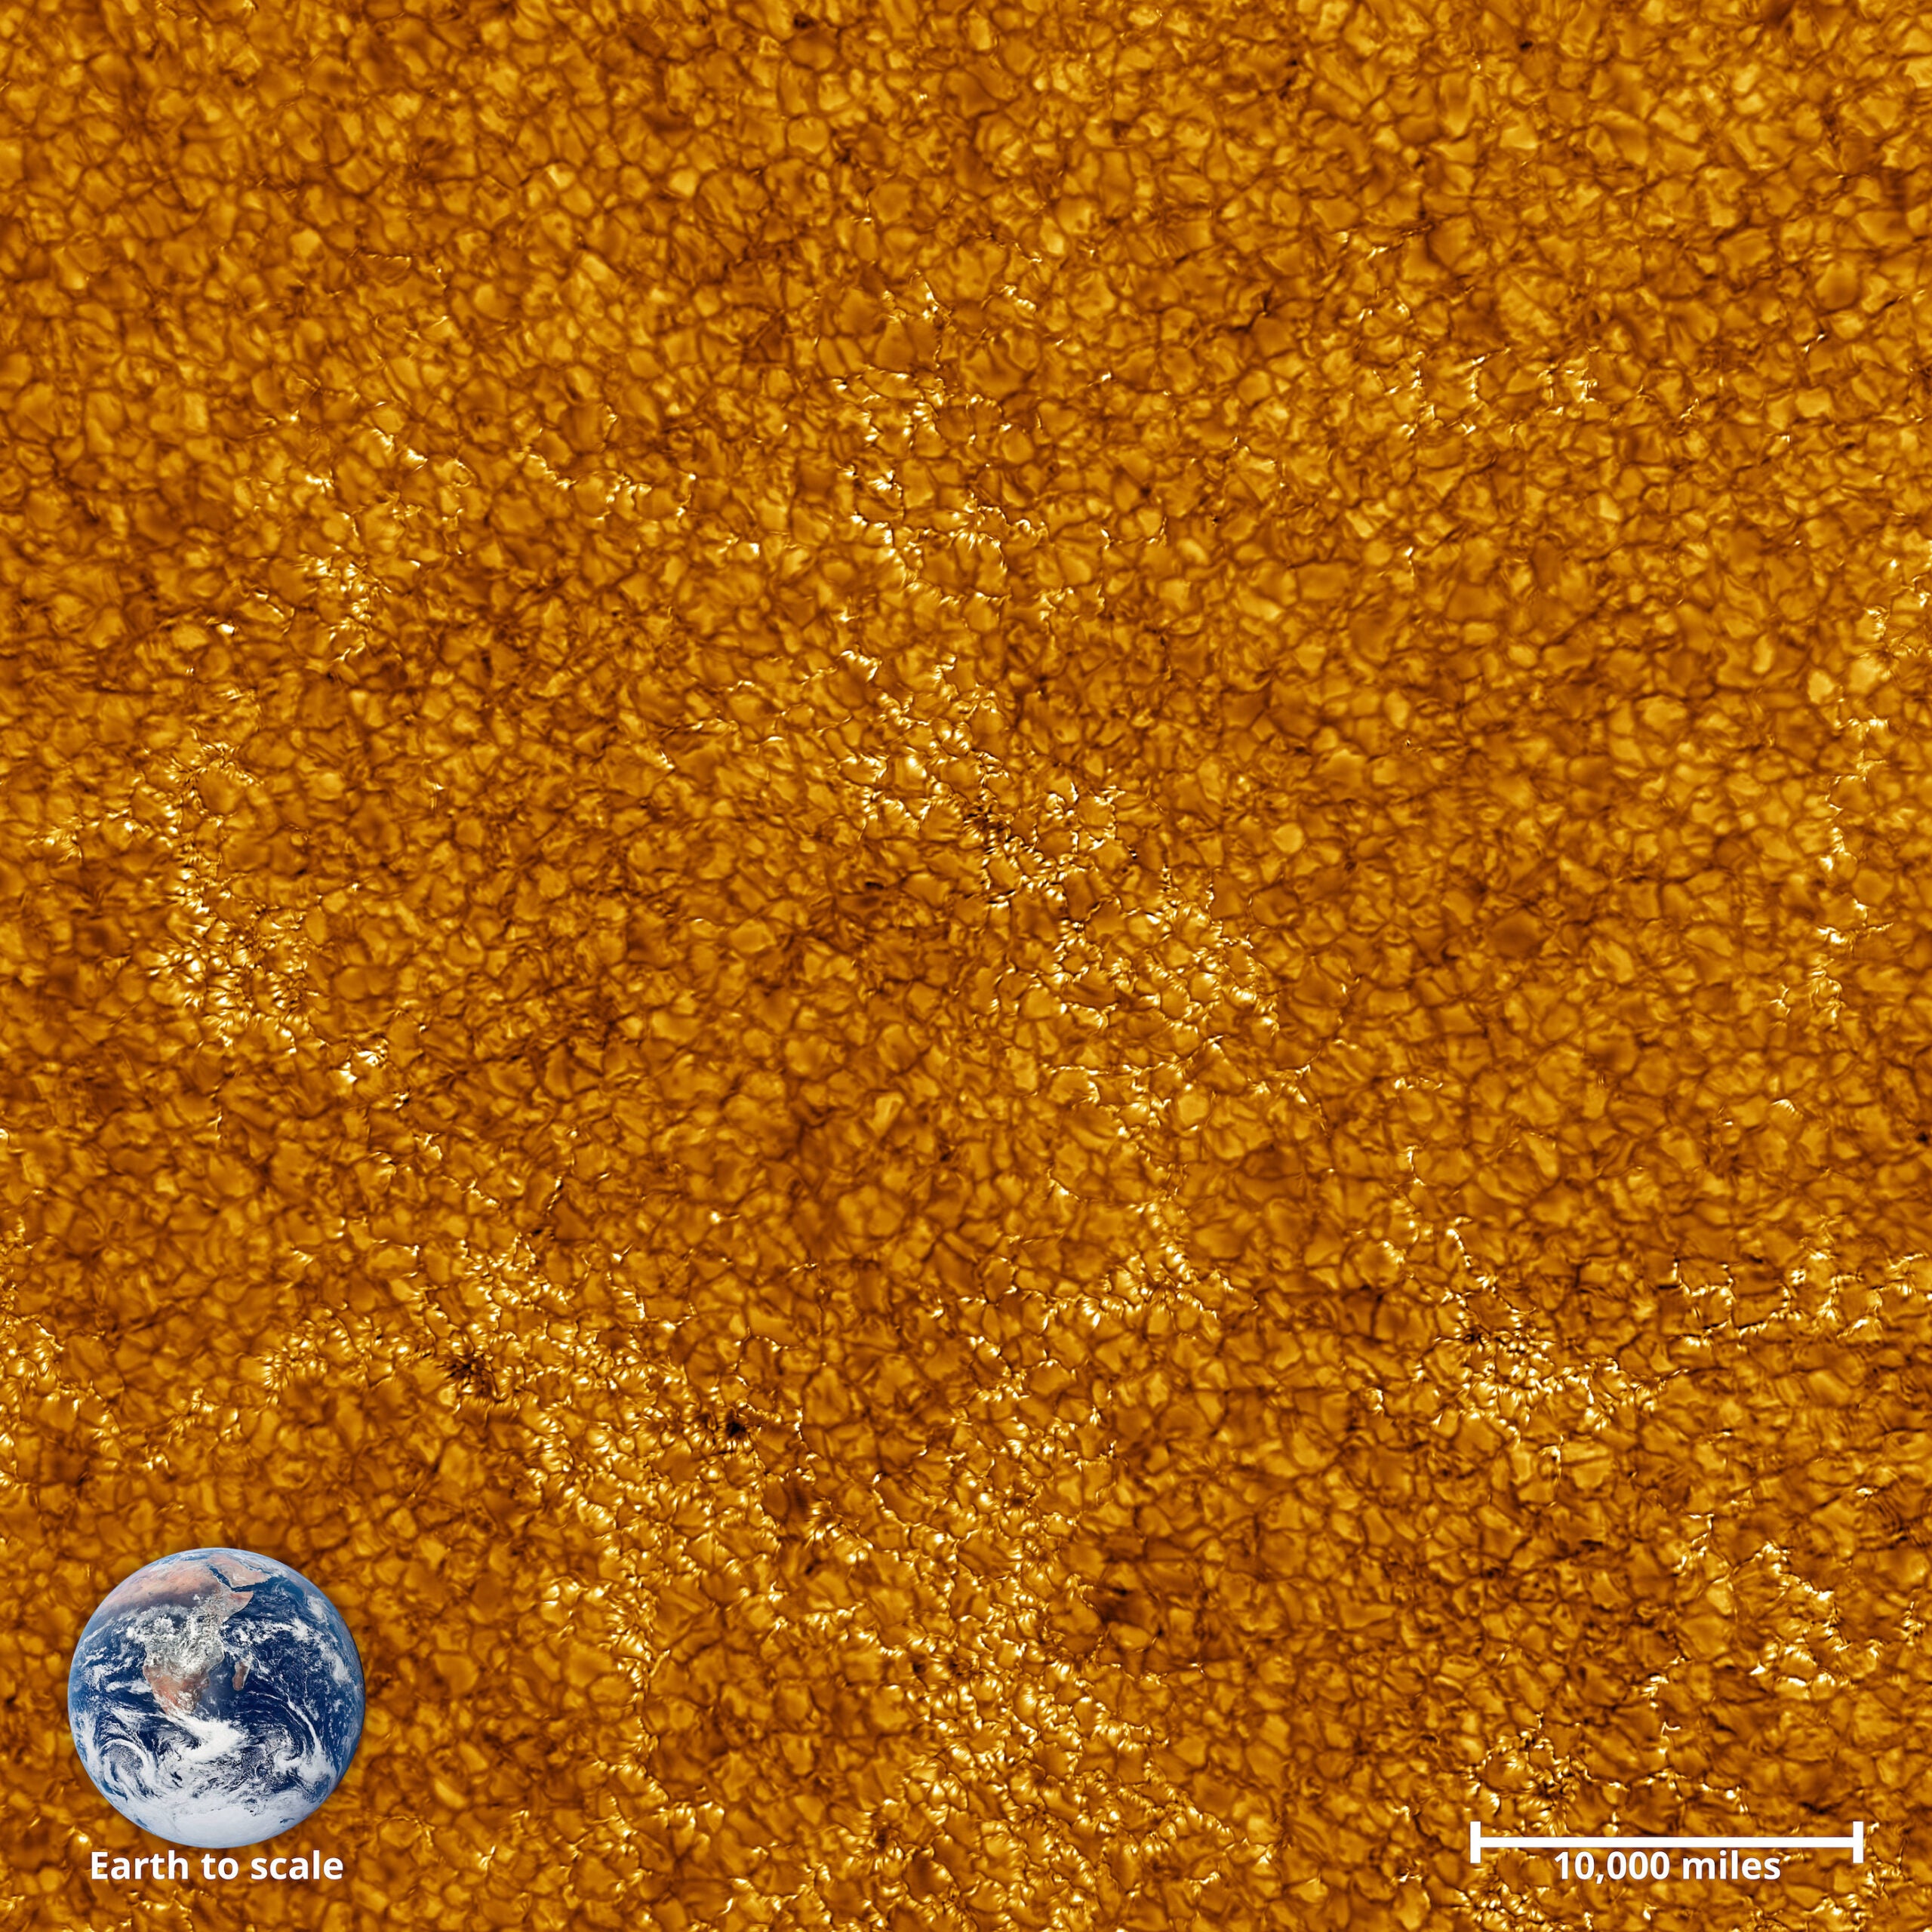 Inouye Solar Telescope photos sun and earth